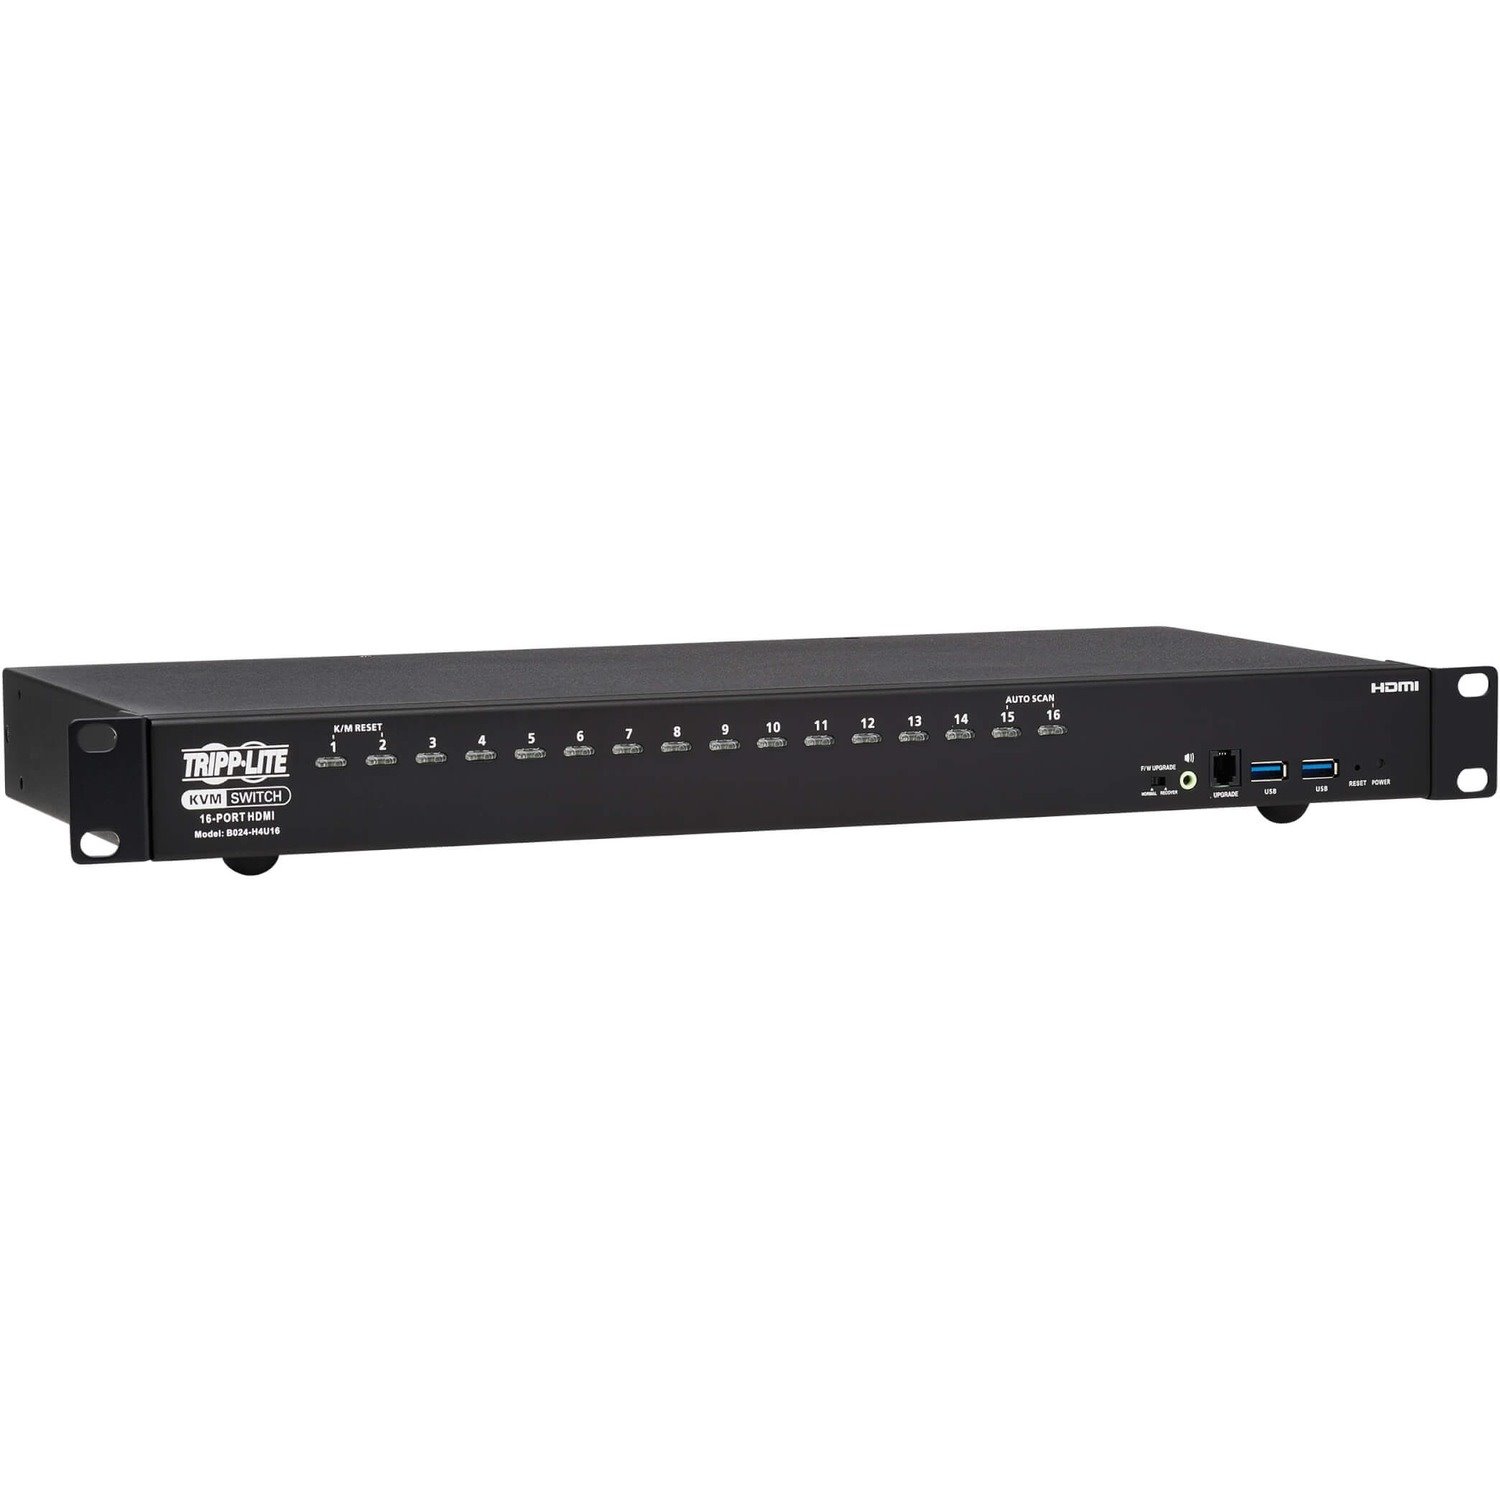 Tripp Lite by Eaton 16-Port 4K HDMI/USB KVM Switch - 4K 60 Hz Video/Audio, USB Peripheral Sharing, 1U Rack-Mount